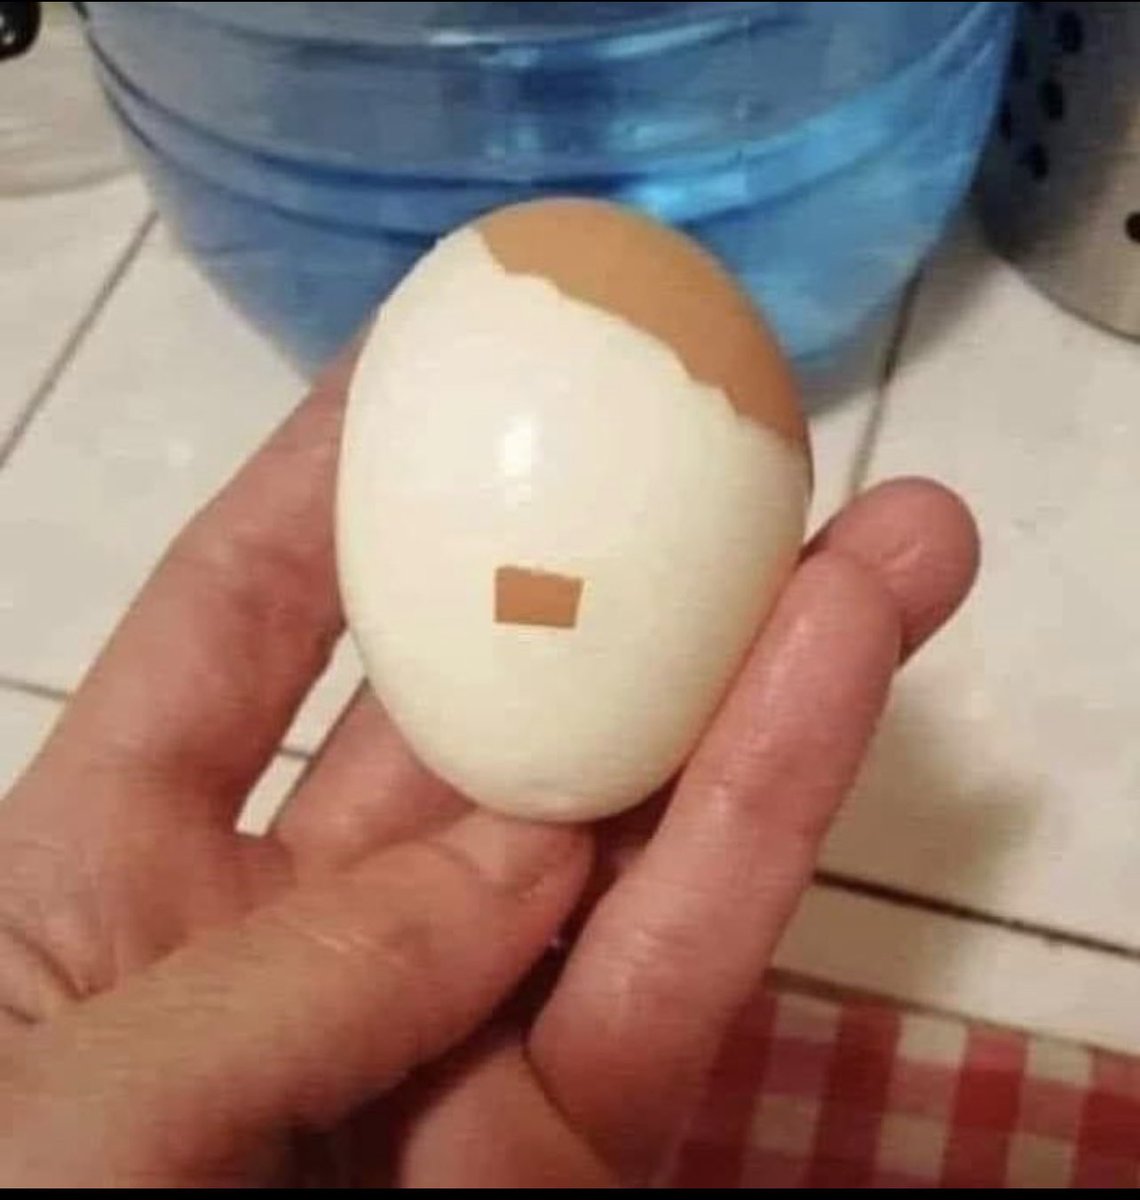 How d’ya like your eggs